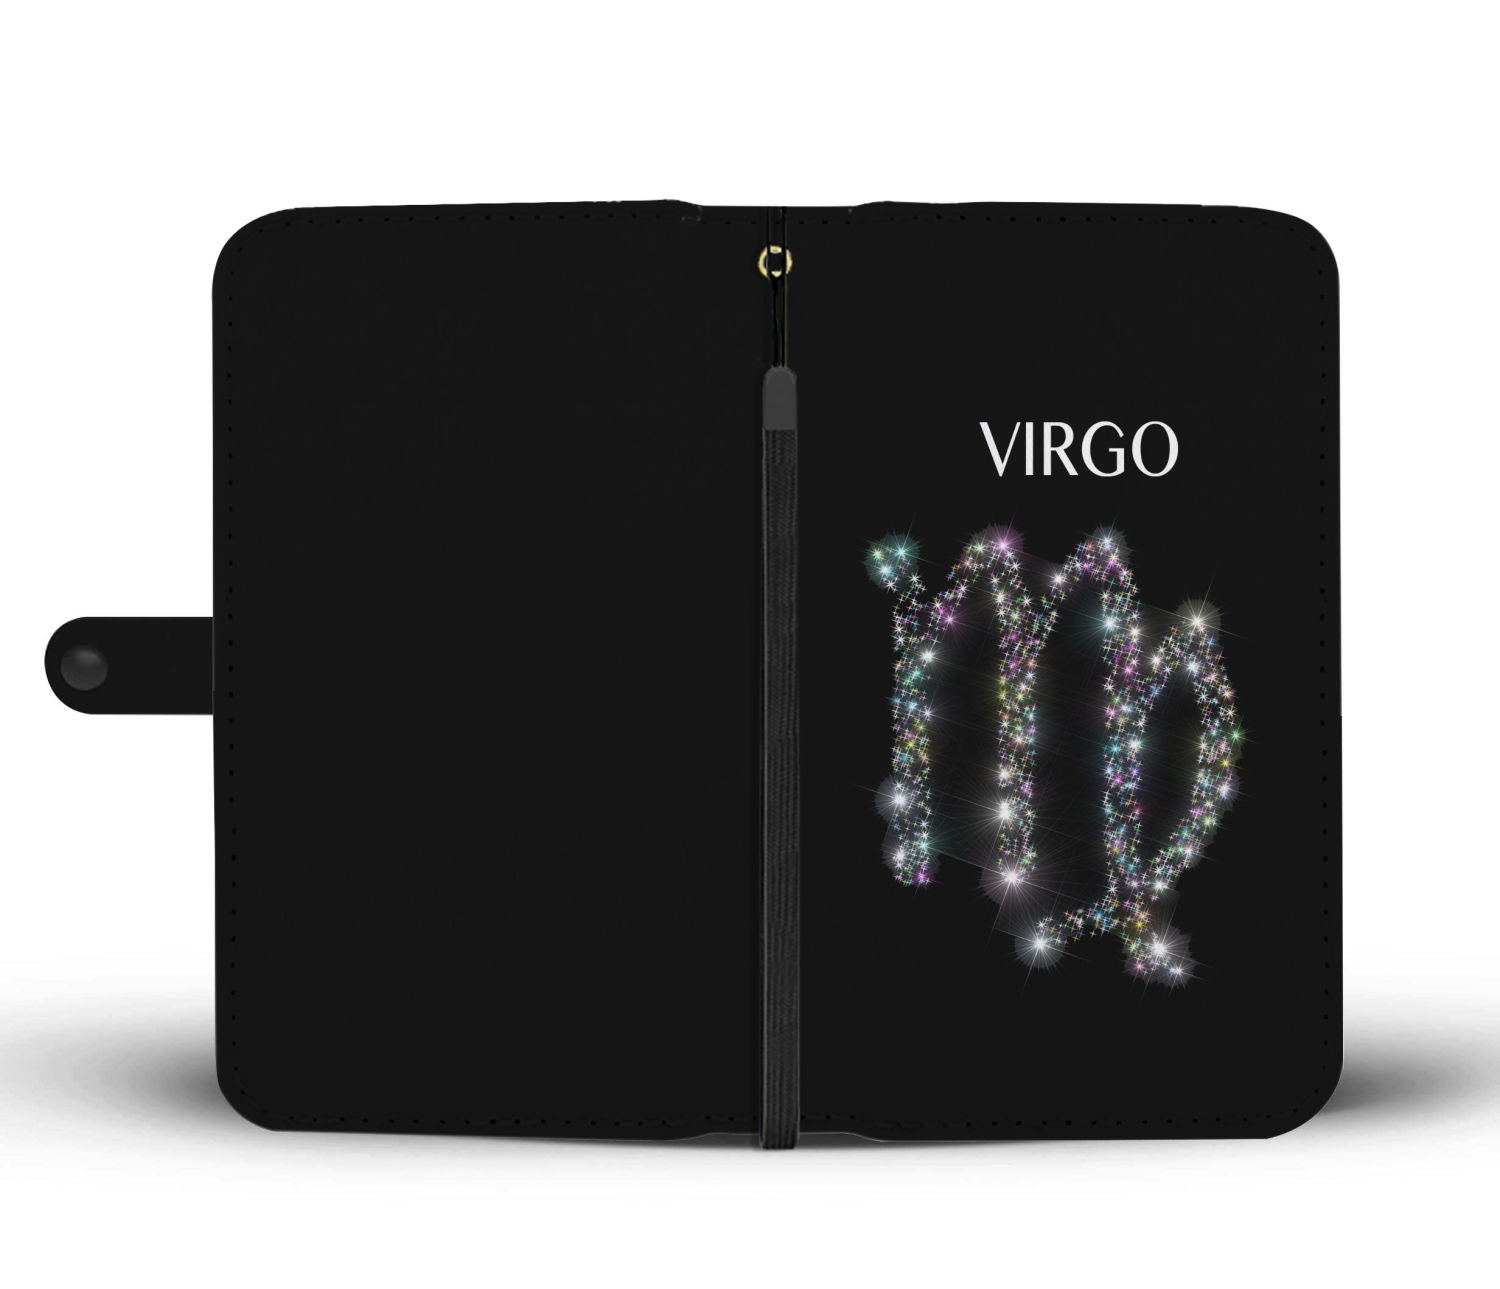 Virgo Stars Phone Wallet